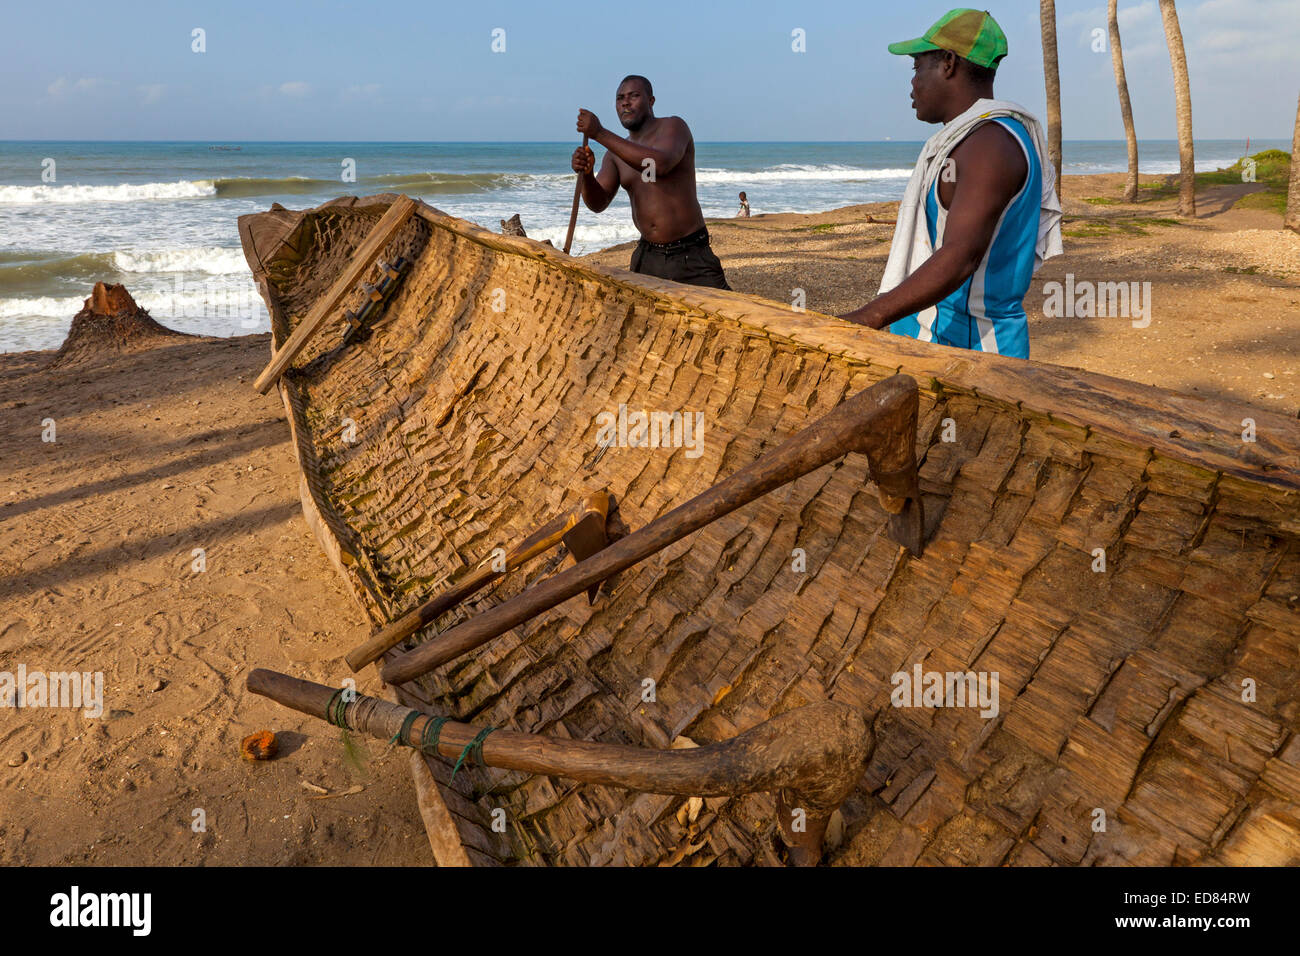 Building fishing boats at Prampram, Greater Accra, Ghana, Africa Stock Photo